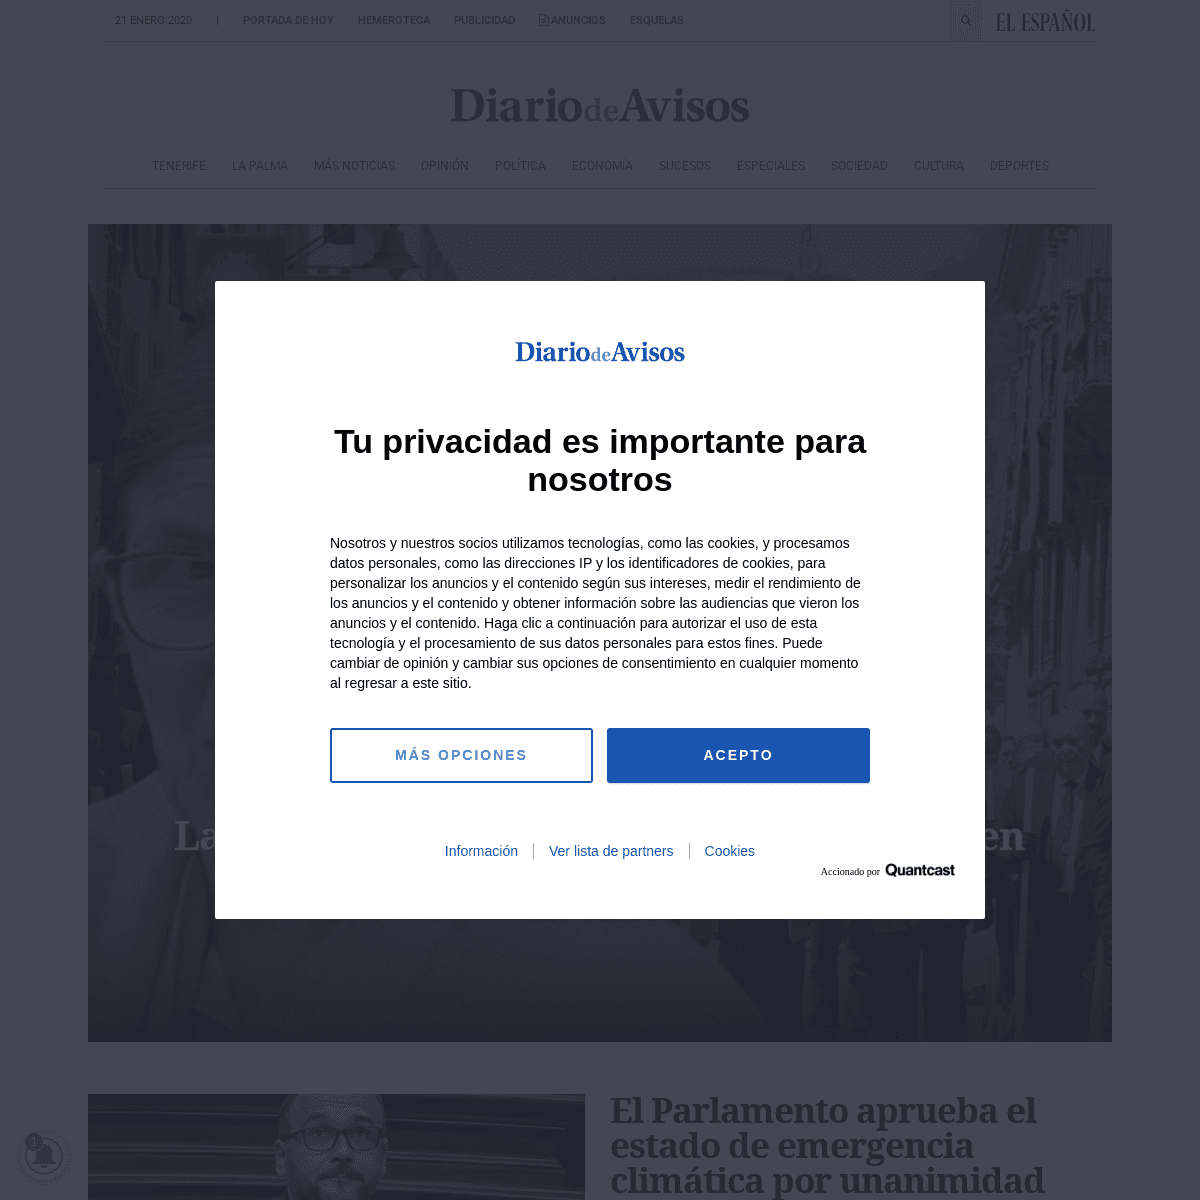 A complete backup of diariodeavisos.com